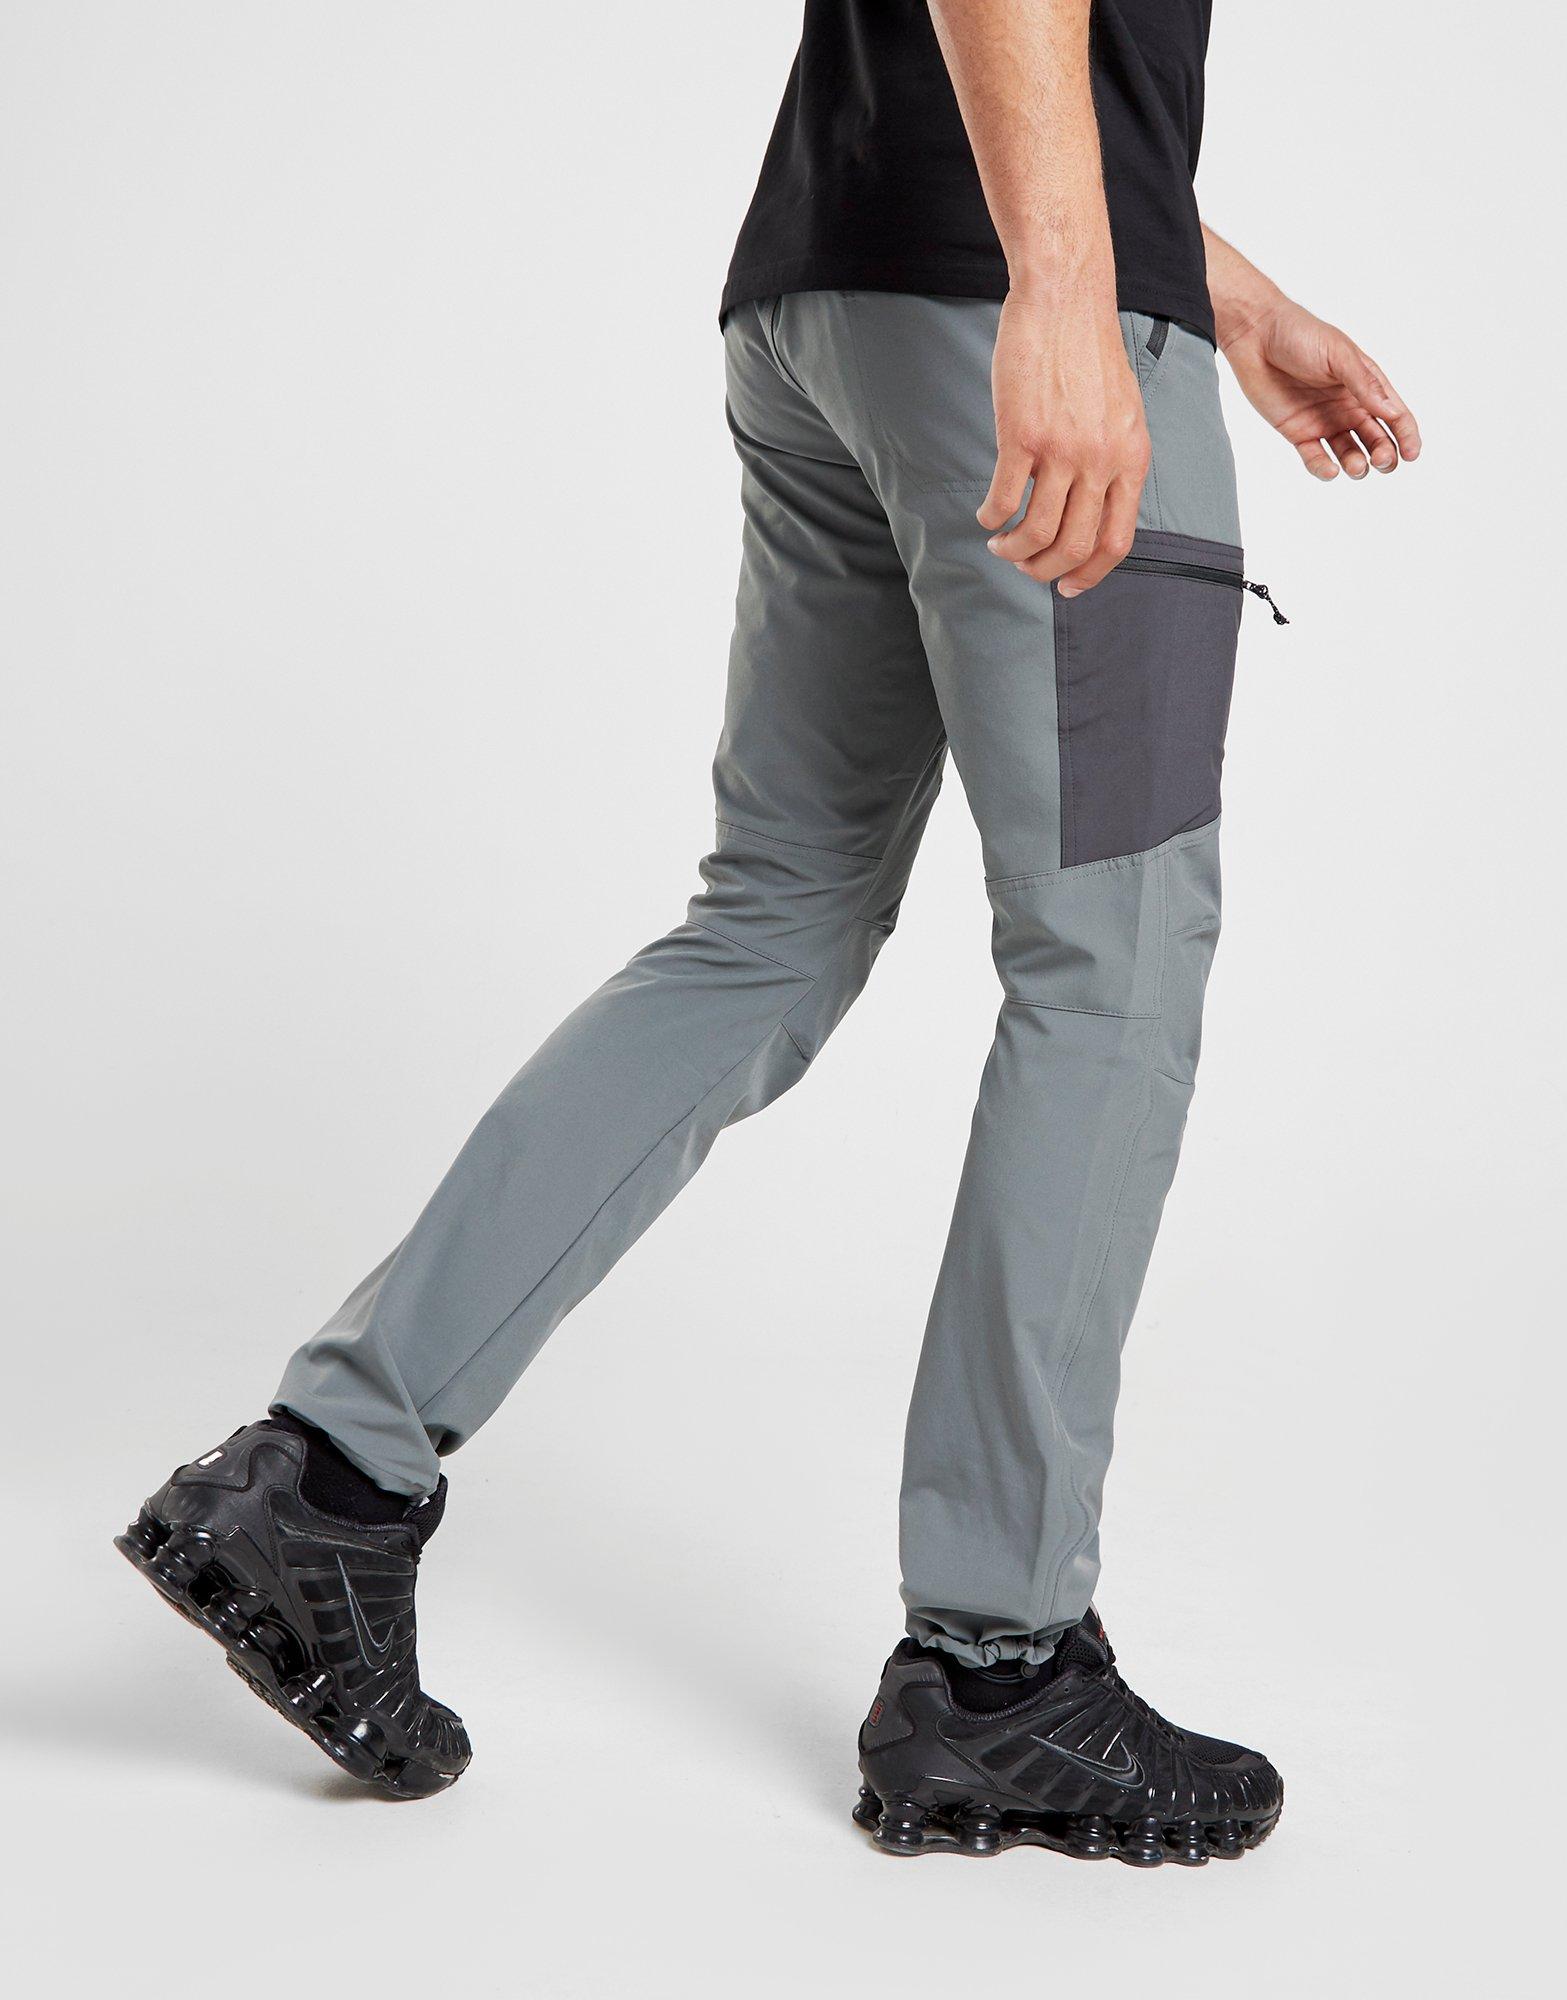 COLUMBIA Triple Canyon Convertible AM1290316 SoftShell Trousers Pants Mens New 